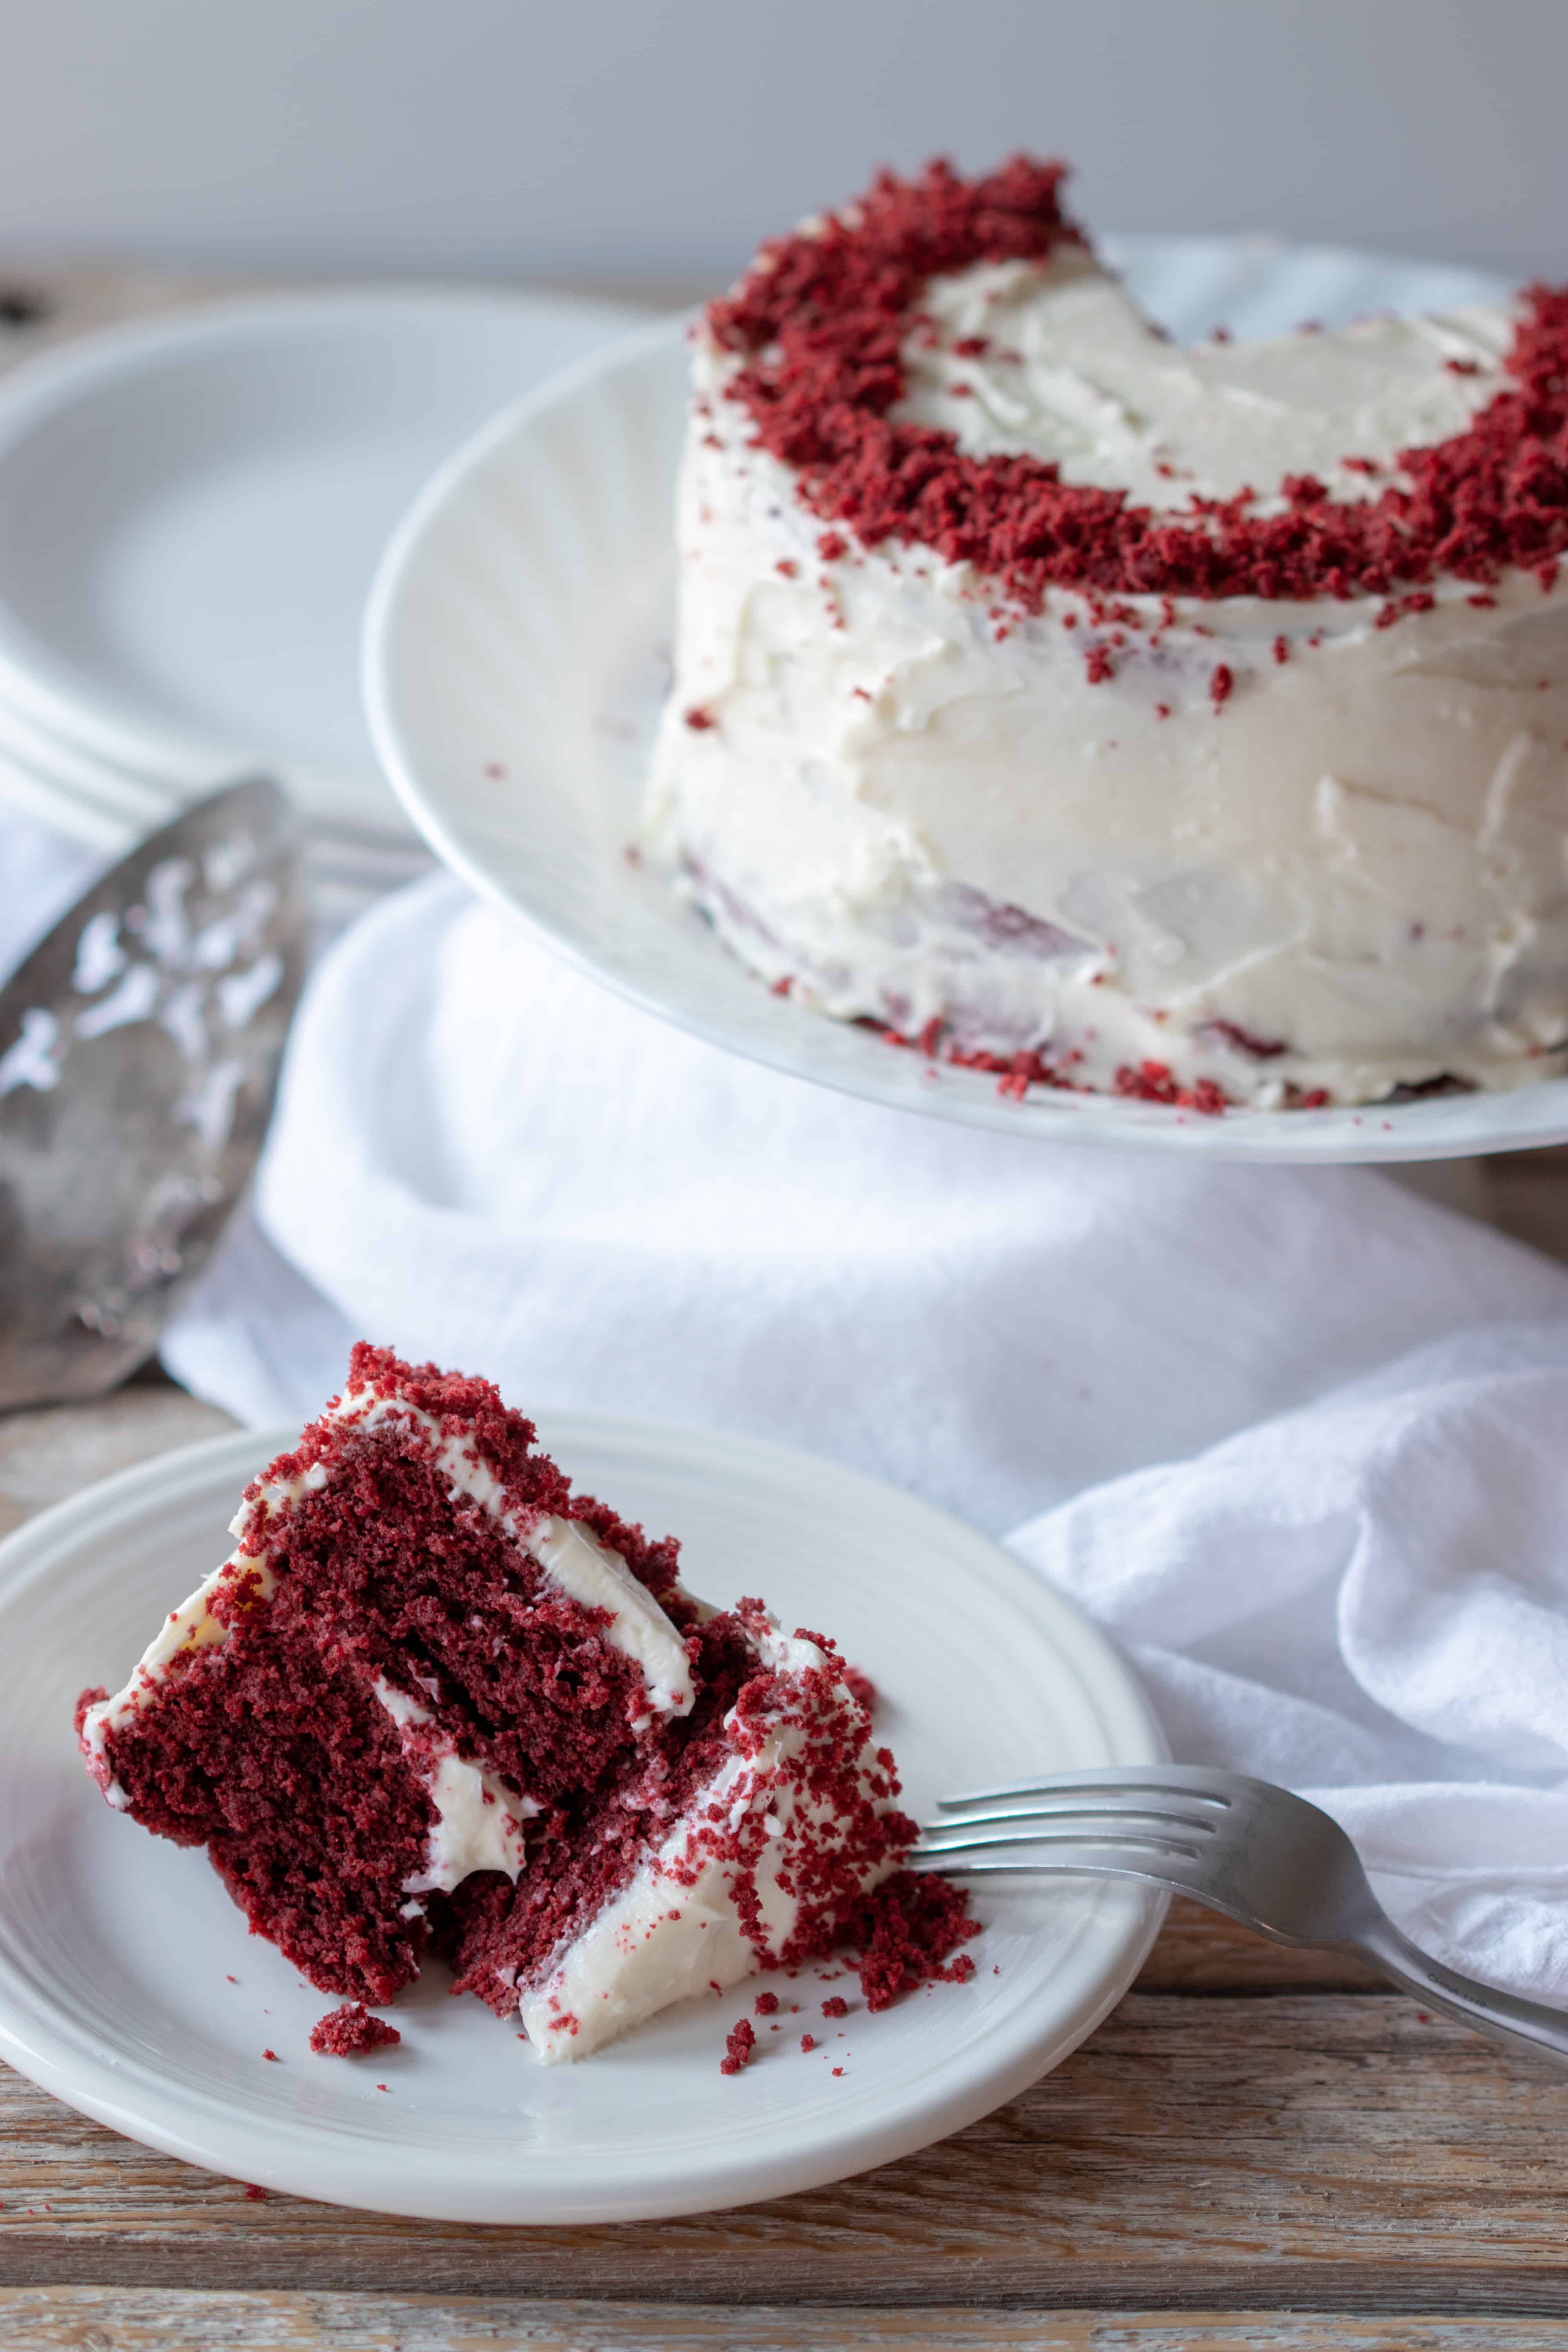 How to Make Sugar Free Red Velvet Cake – Keto Friendly Cake!